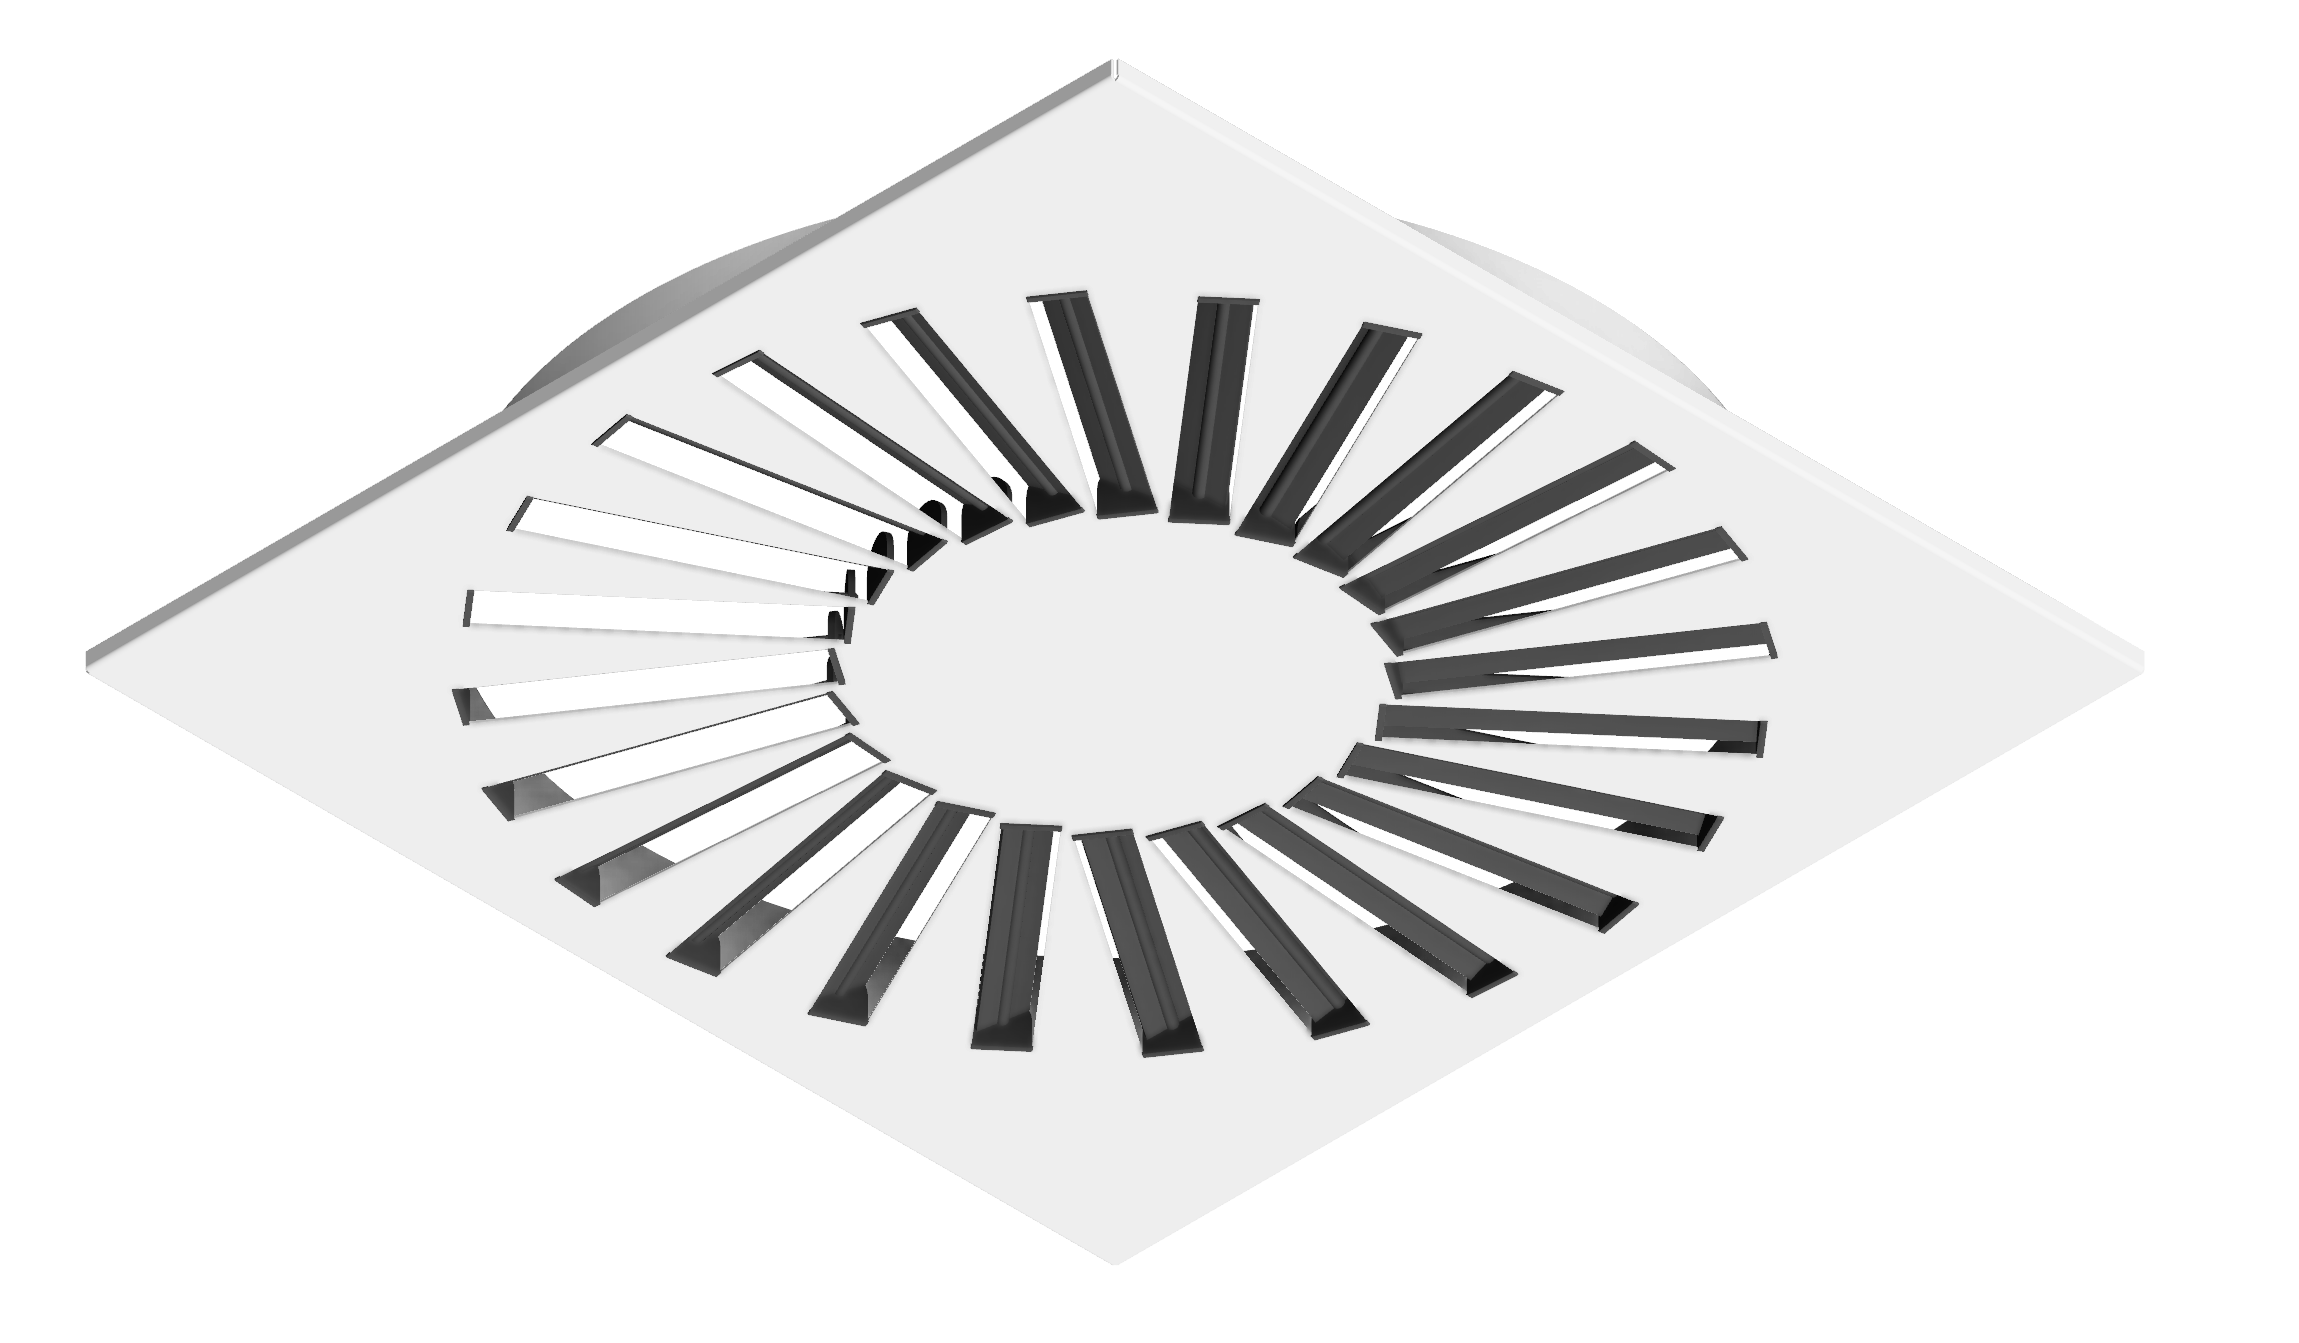 Swirl Diffuser Type C (Square)